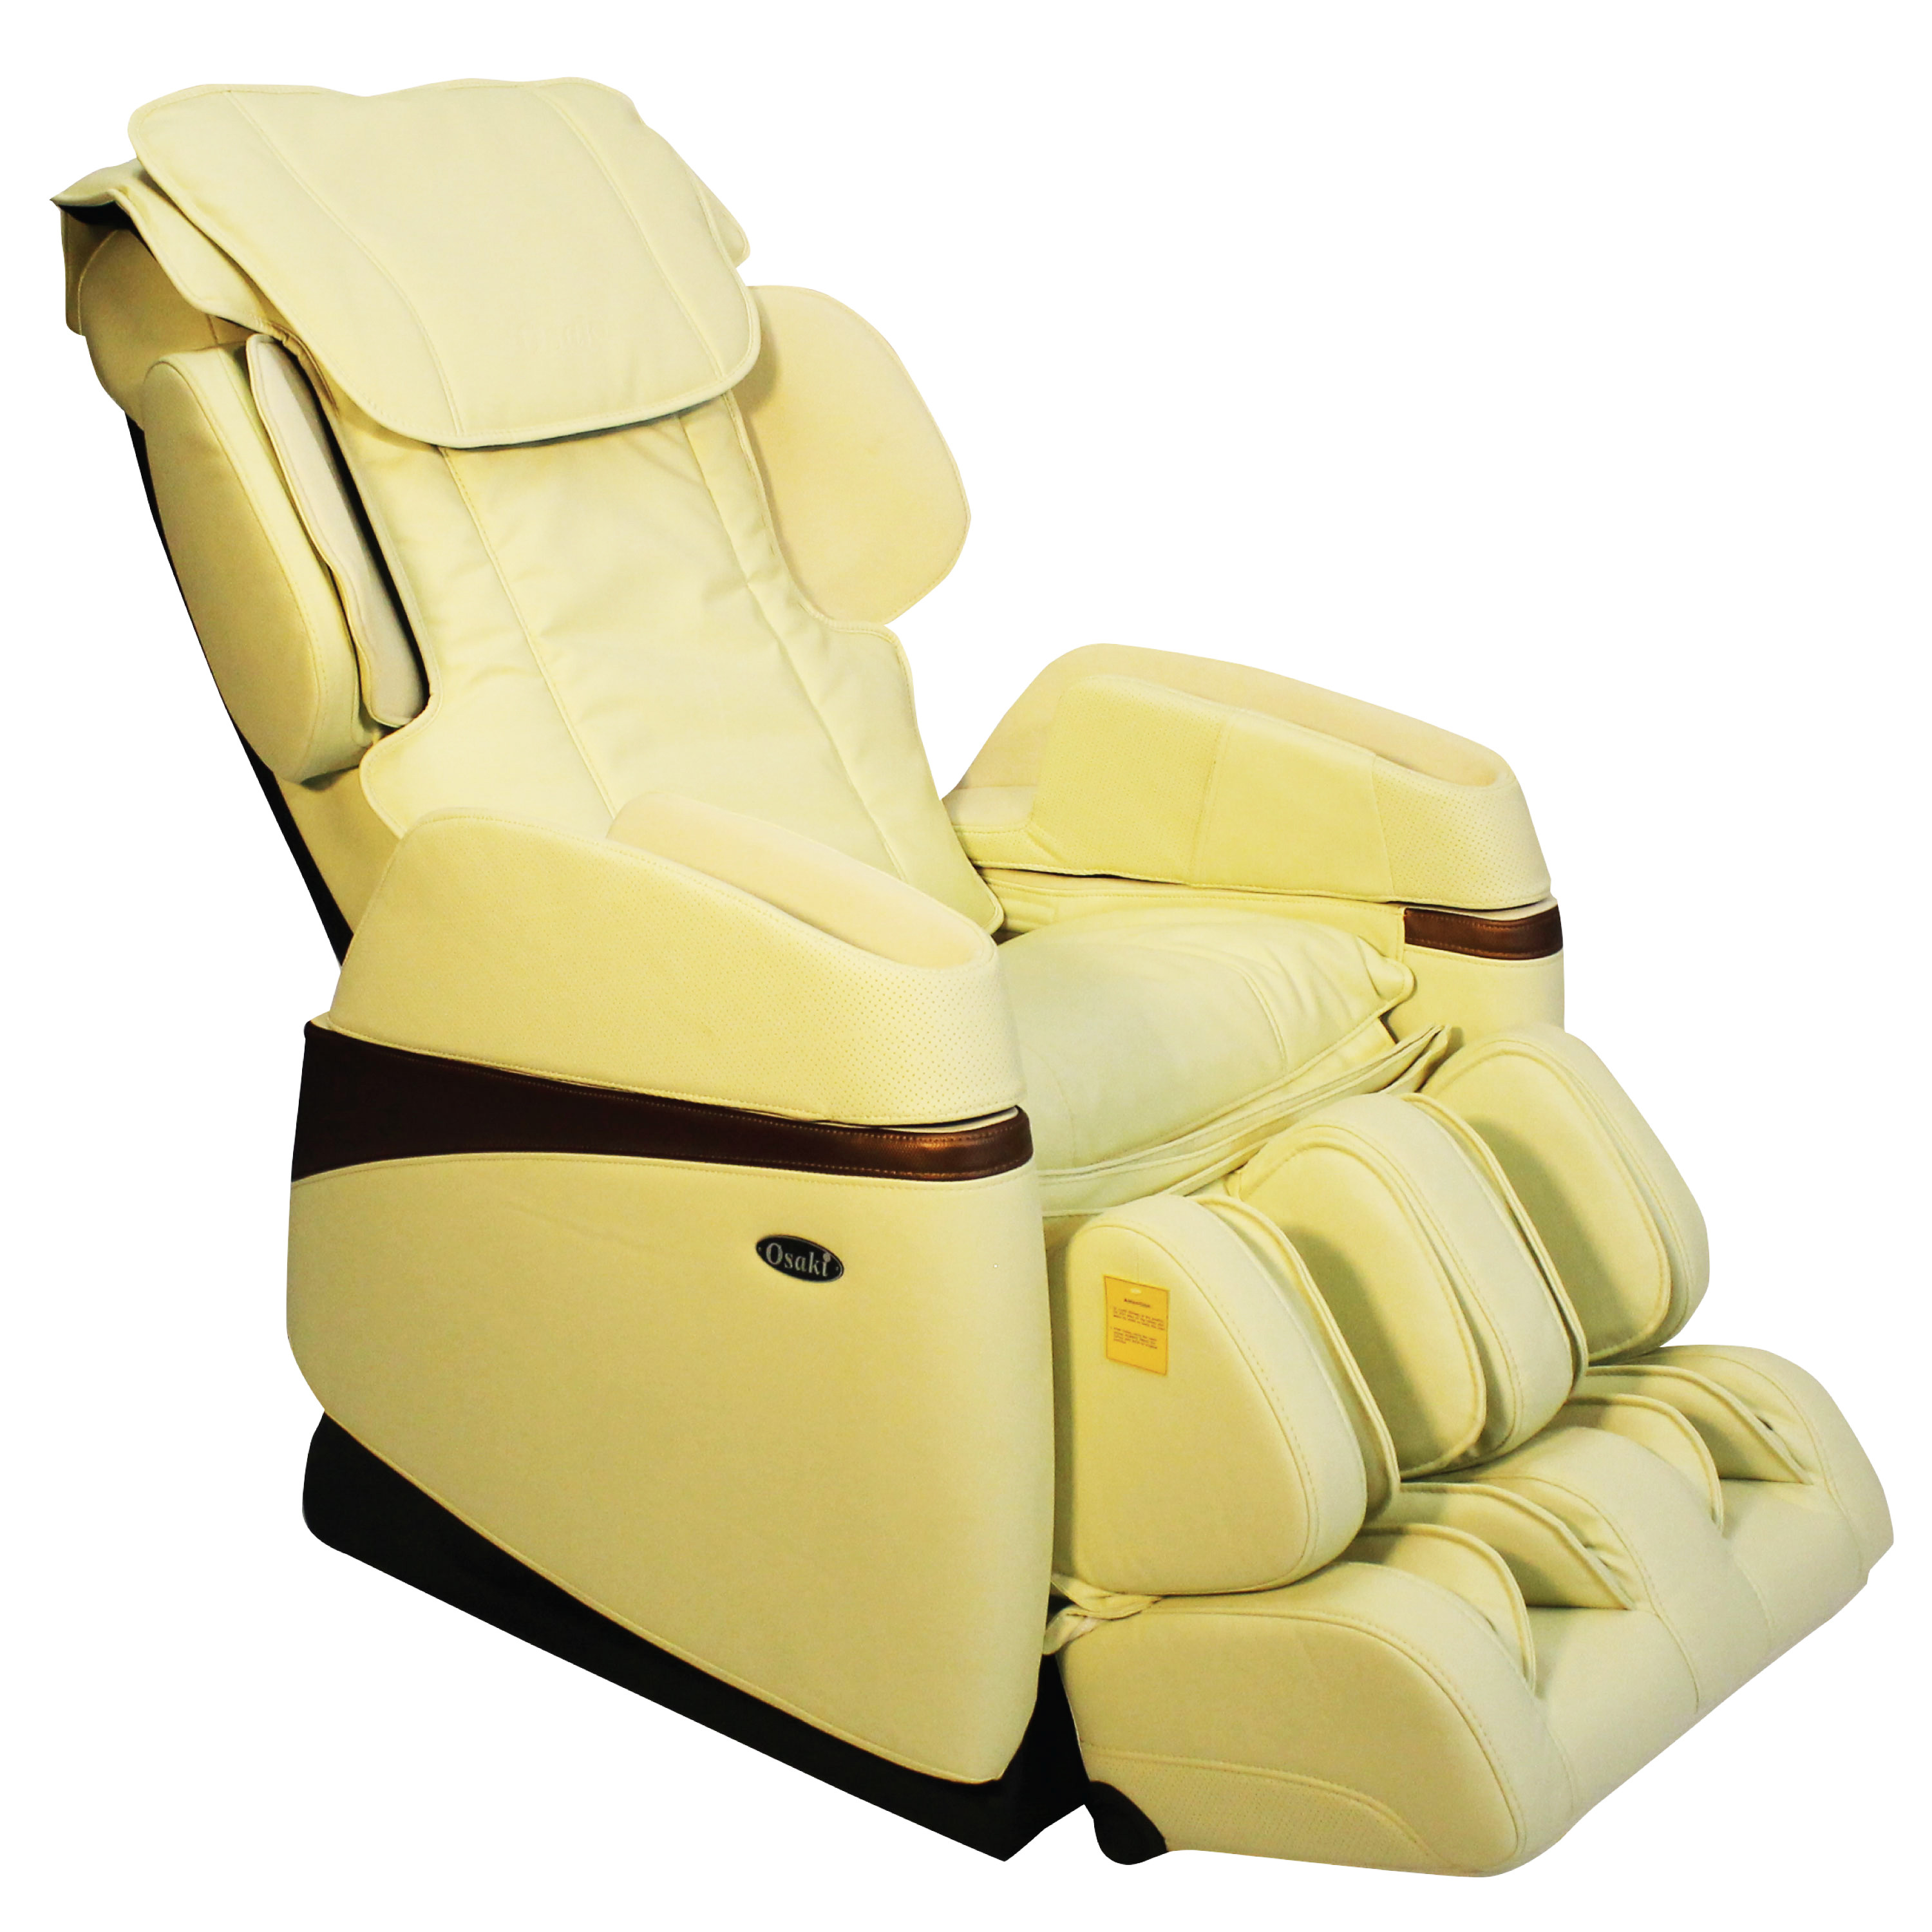 Osaki 3700 Massage Chair - Cream - Front Angle View